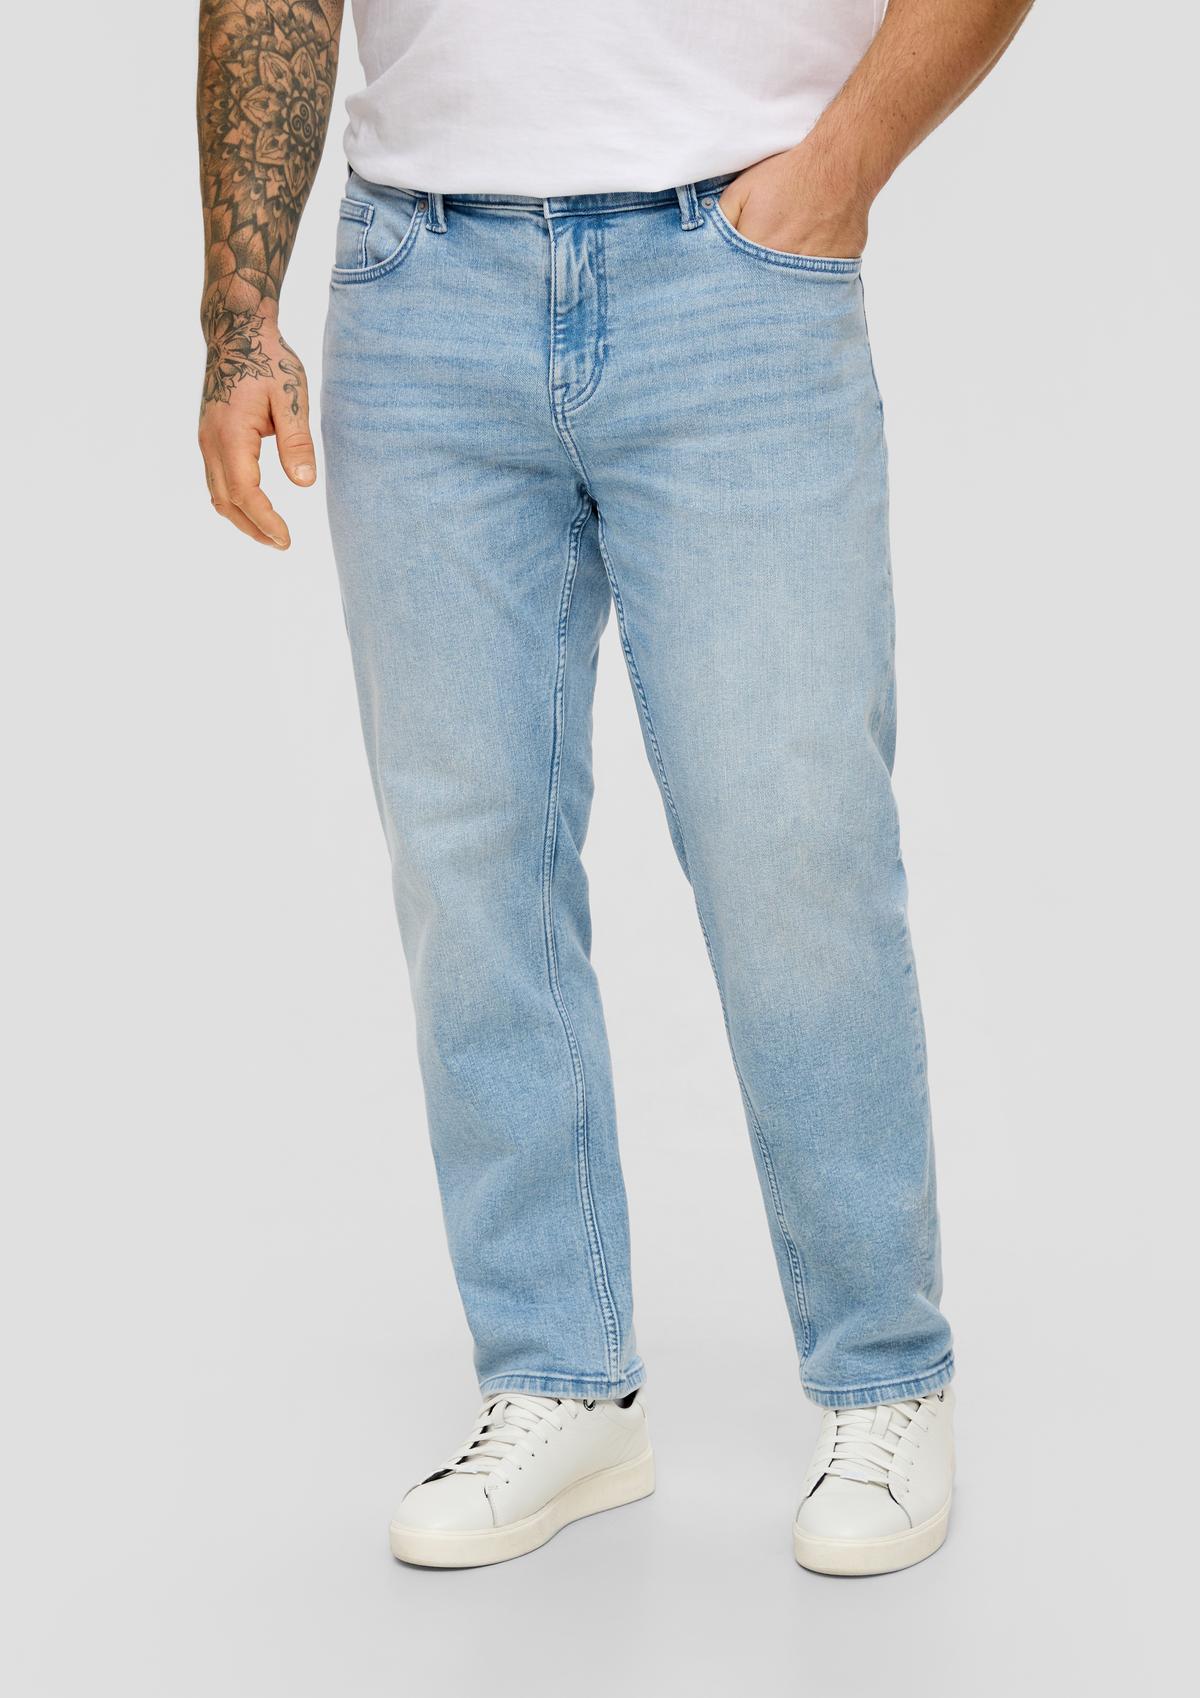 Jeans hlače Casby/kroj Relaxed Fit/Mid Rise/ravne hlačnice